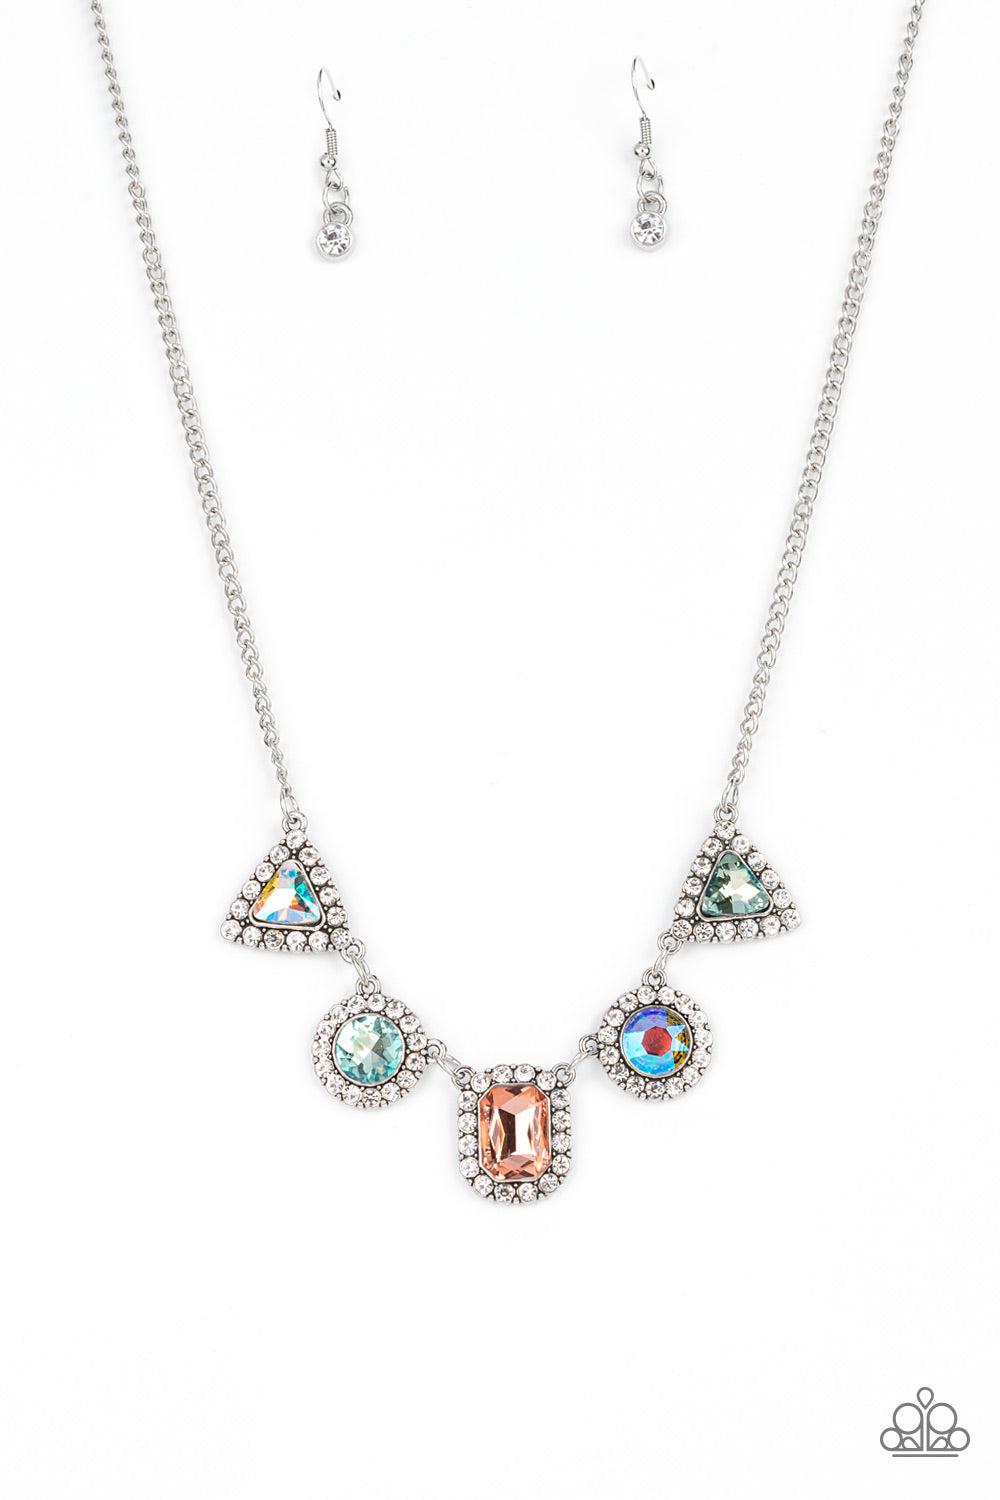 Posh Party Avenue Multi Iridescent Rhinestone Necklace - Paparazzi Accessories- lightbox - CarasShop.com - $5 Jewelry by Cara Jewels